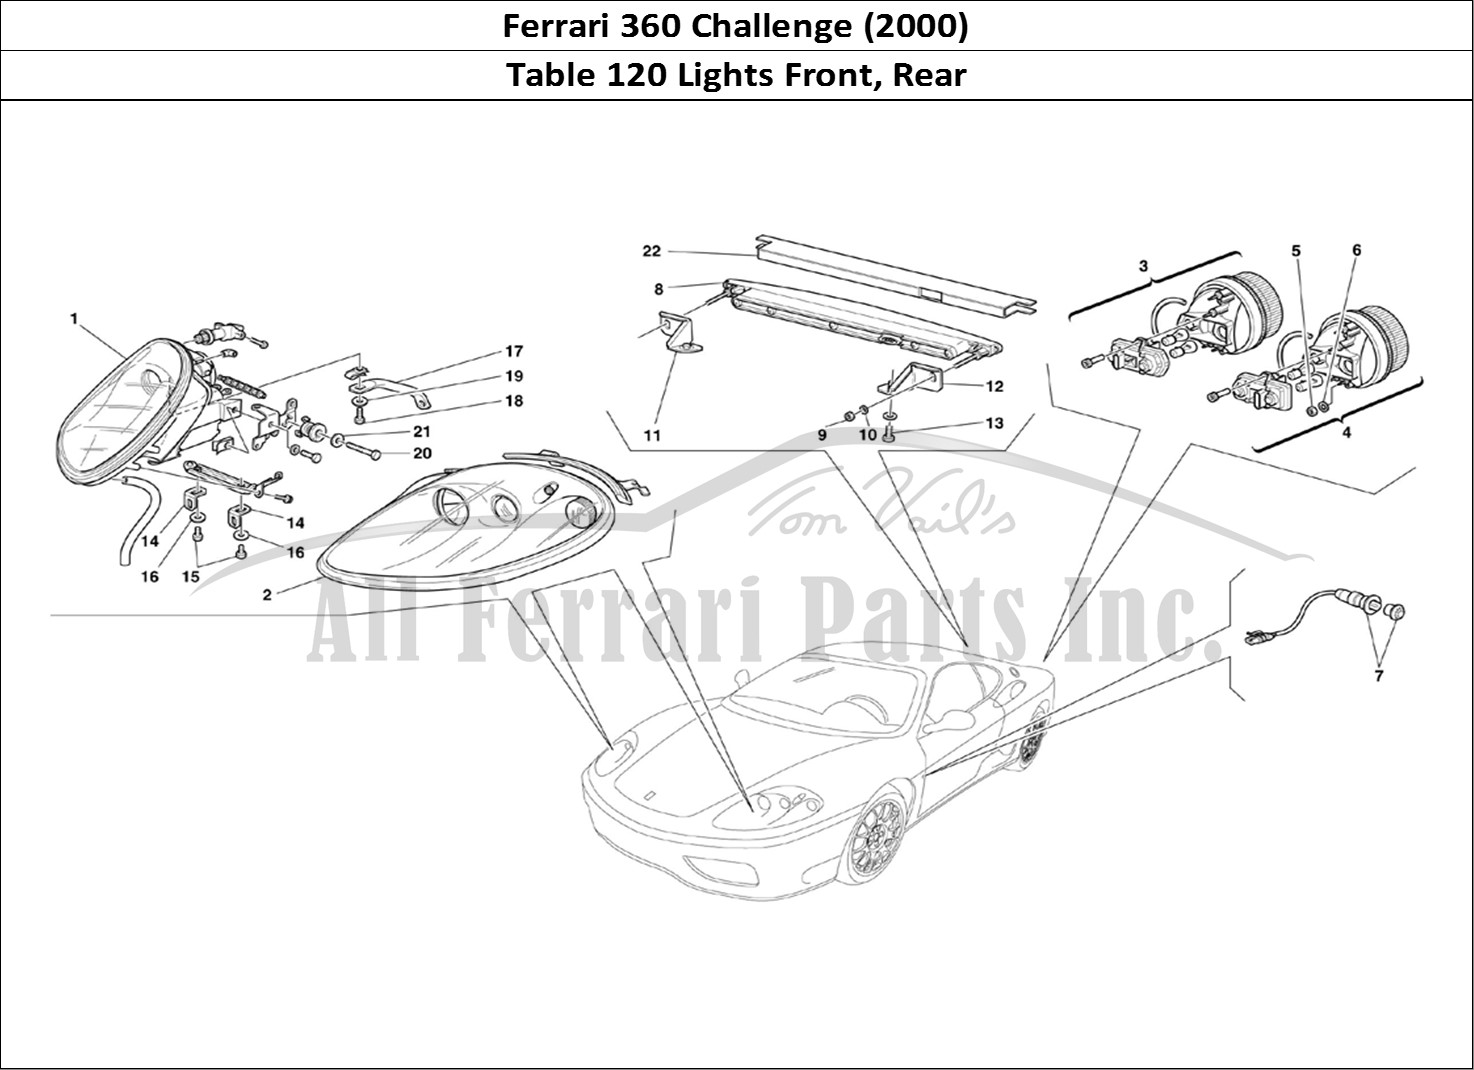 Ferrari Parts Ferrari 360 Challenge (2000) Page 120 Front and Rear Lights